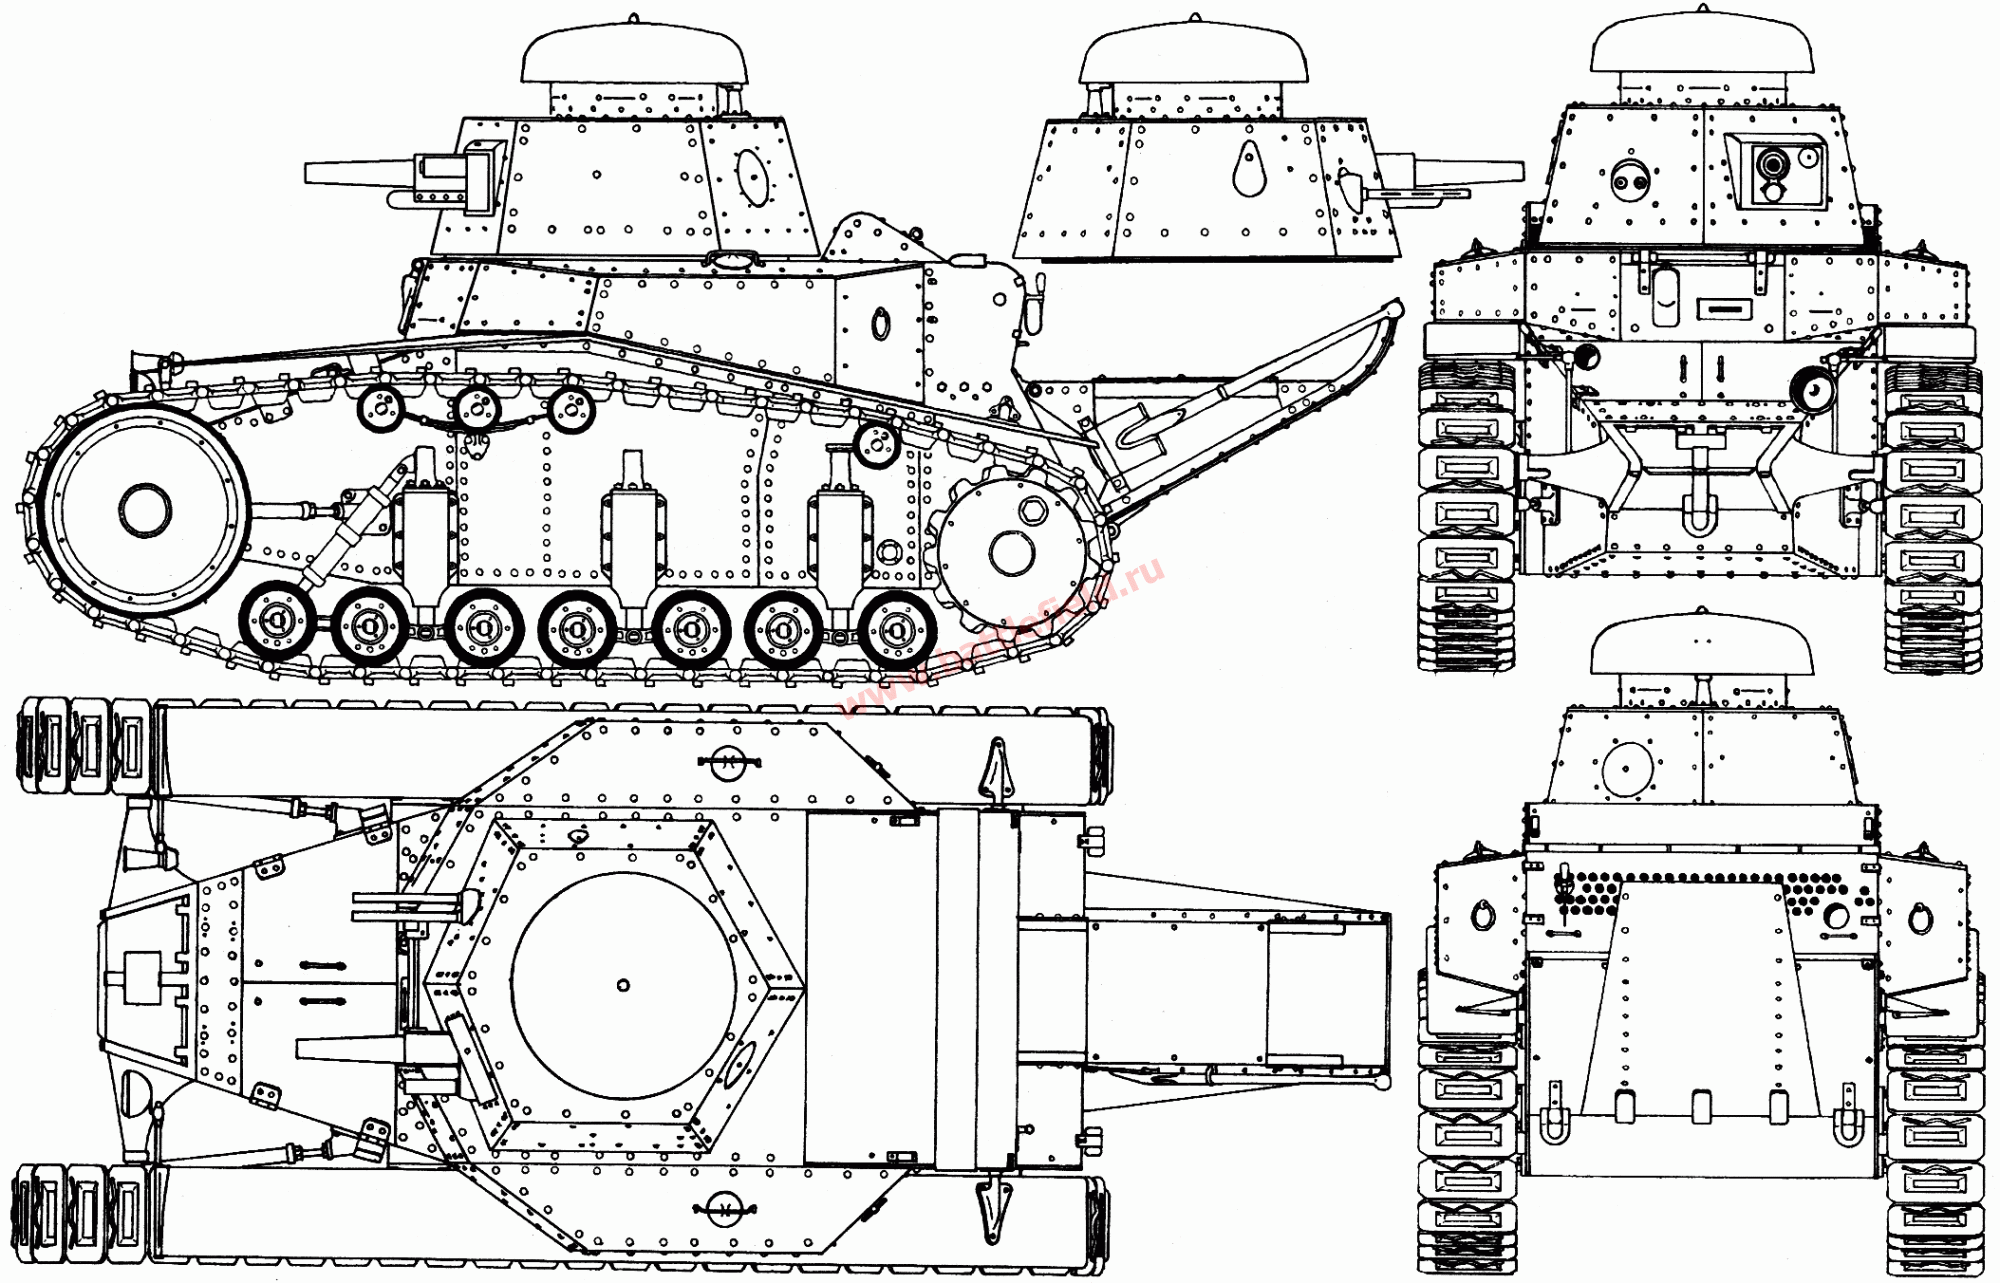 Легкий танк Т-18